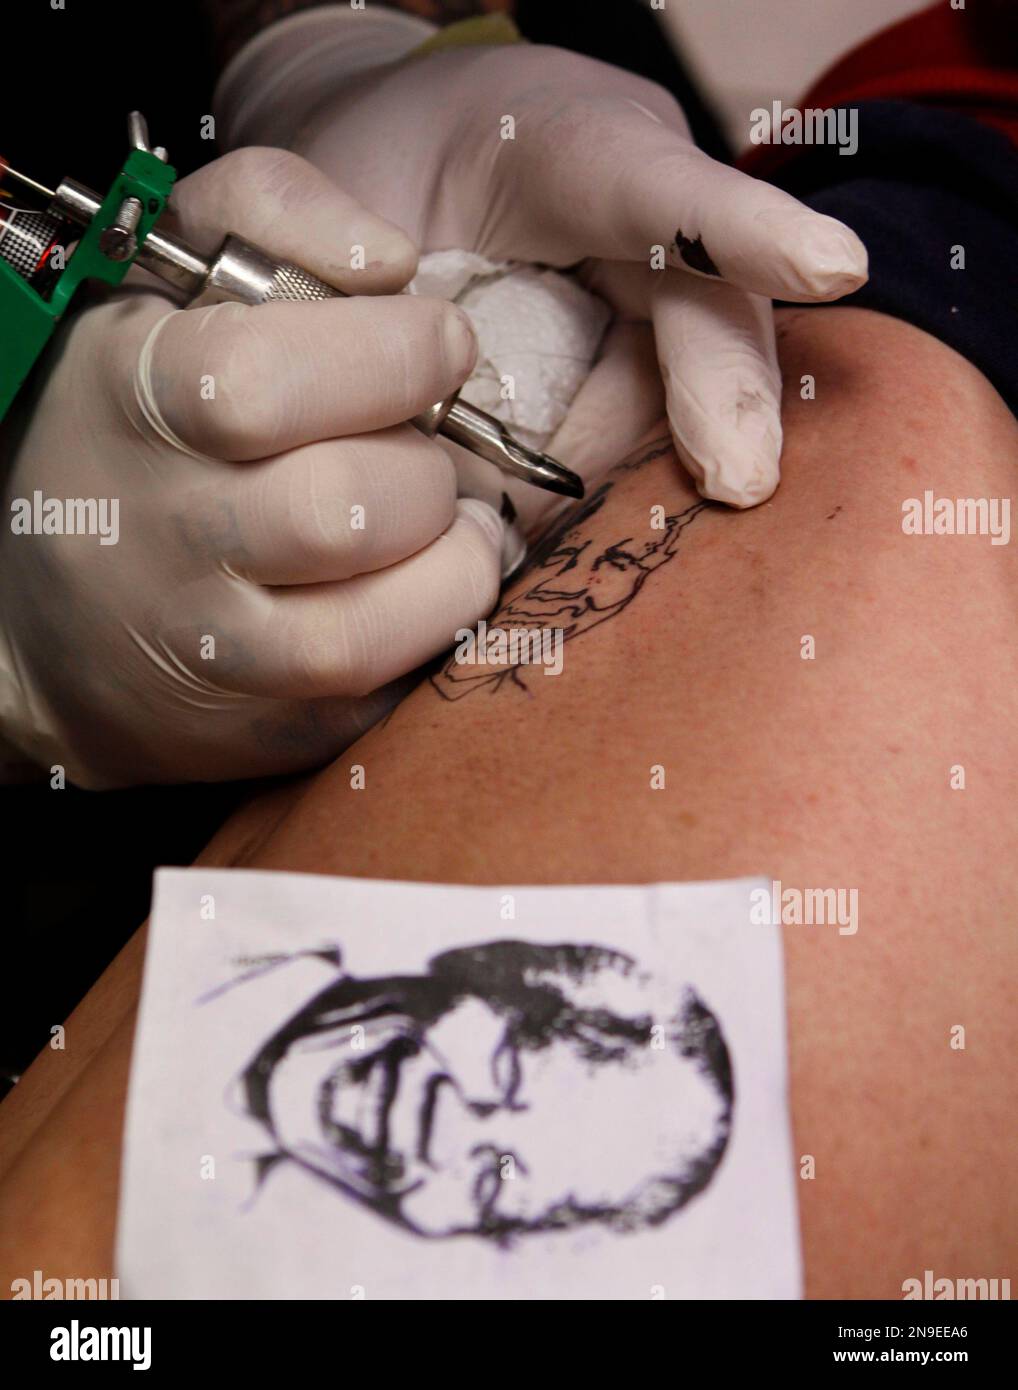 Tattooed U.S. Politicians | Tattoo Hodge Podge